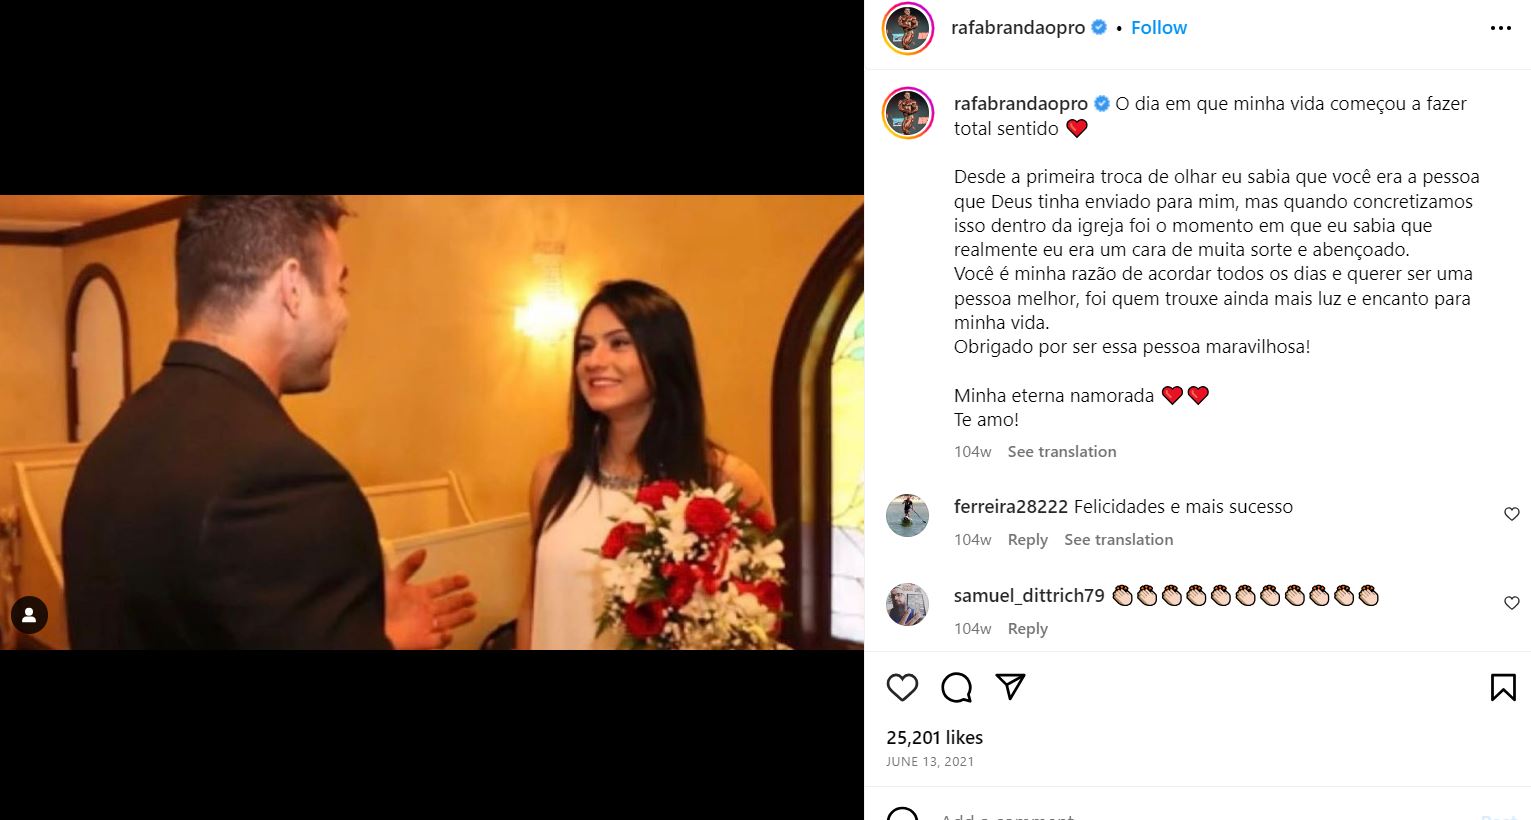 Rafael Brandao posts a photo of their wedding